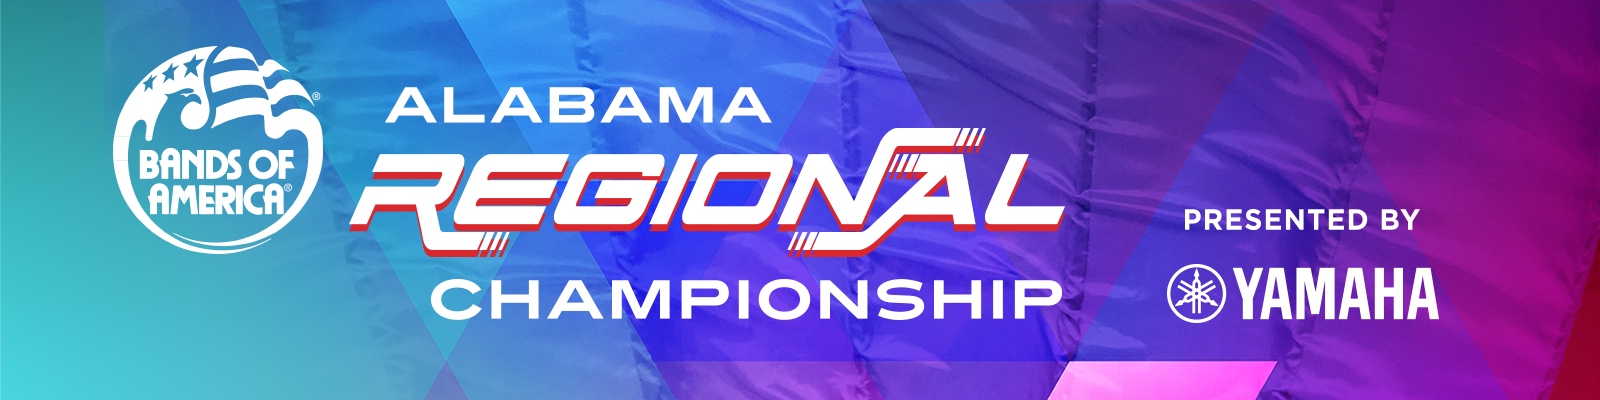 Bands of America Alabama Regional Championship Presented by Yamaha